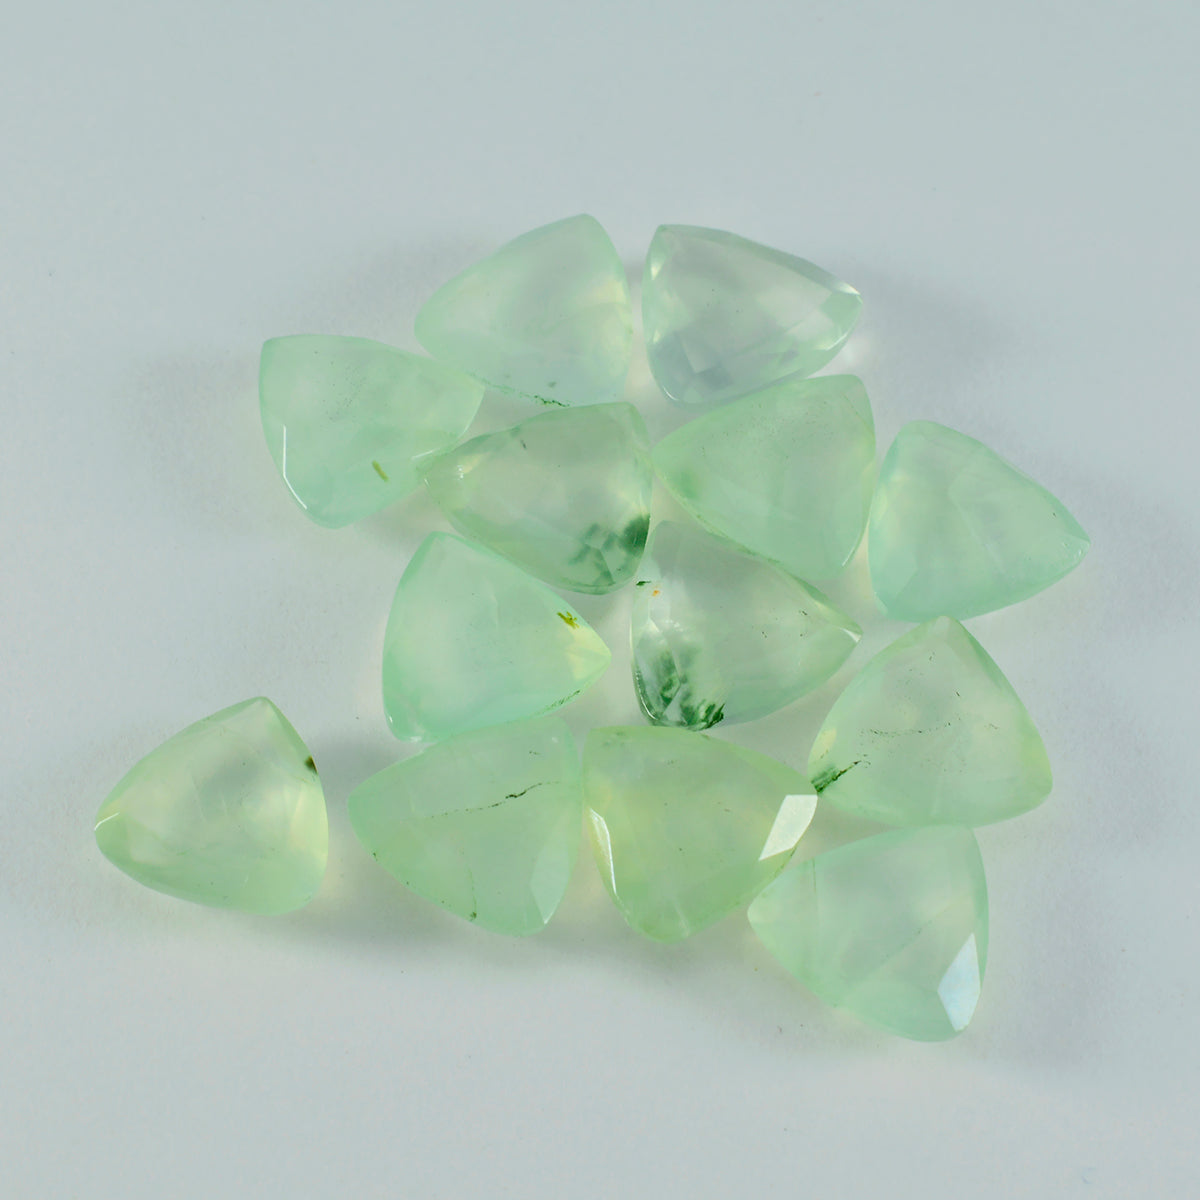 riyogems 1 pezzo di prehnite verde sfaccettato da 5x5 mm a forma di trilioni di gemme sfuse di meravigliosa qualità